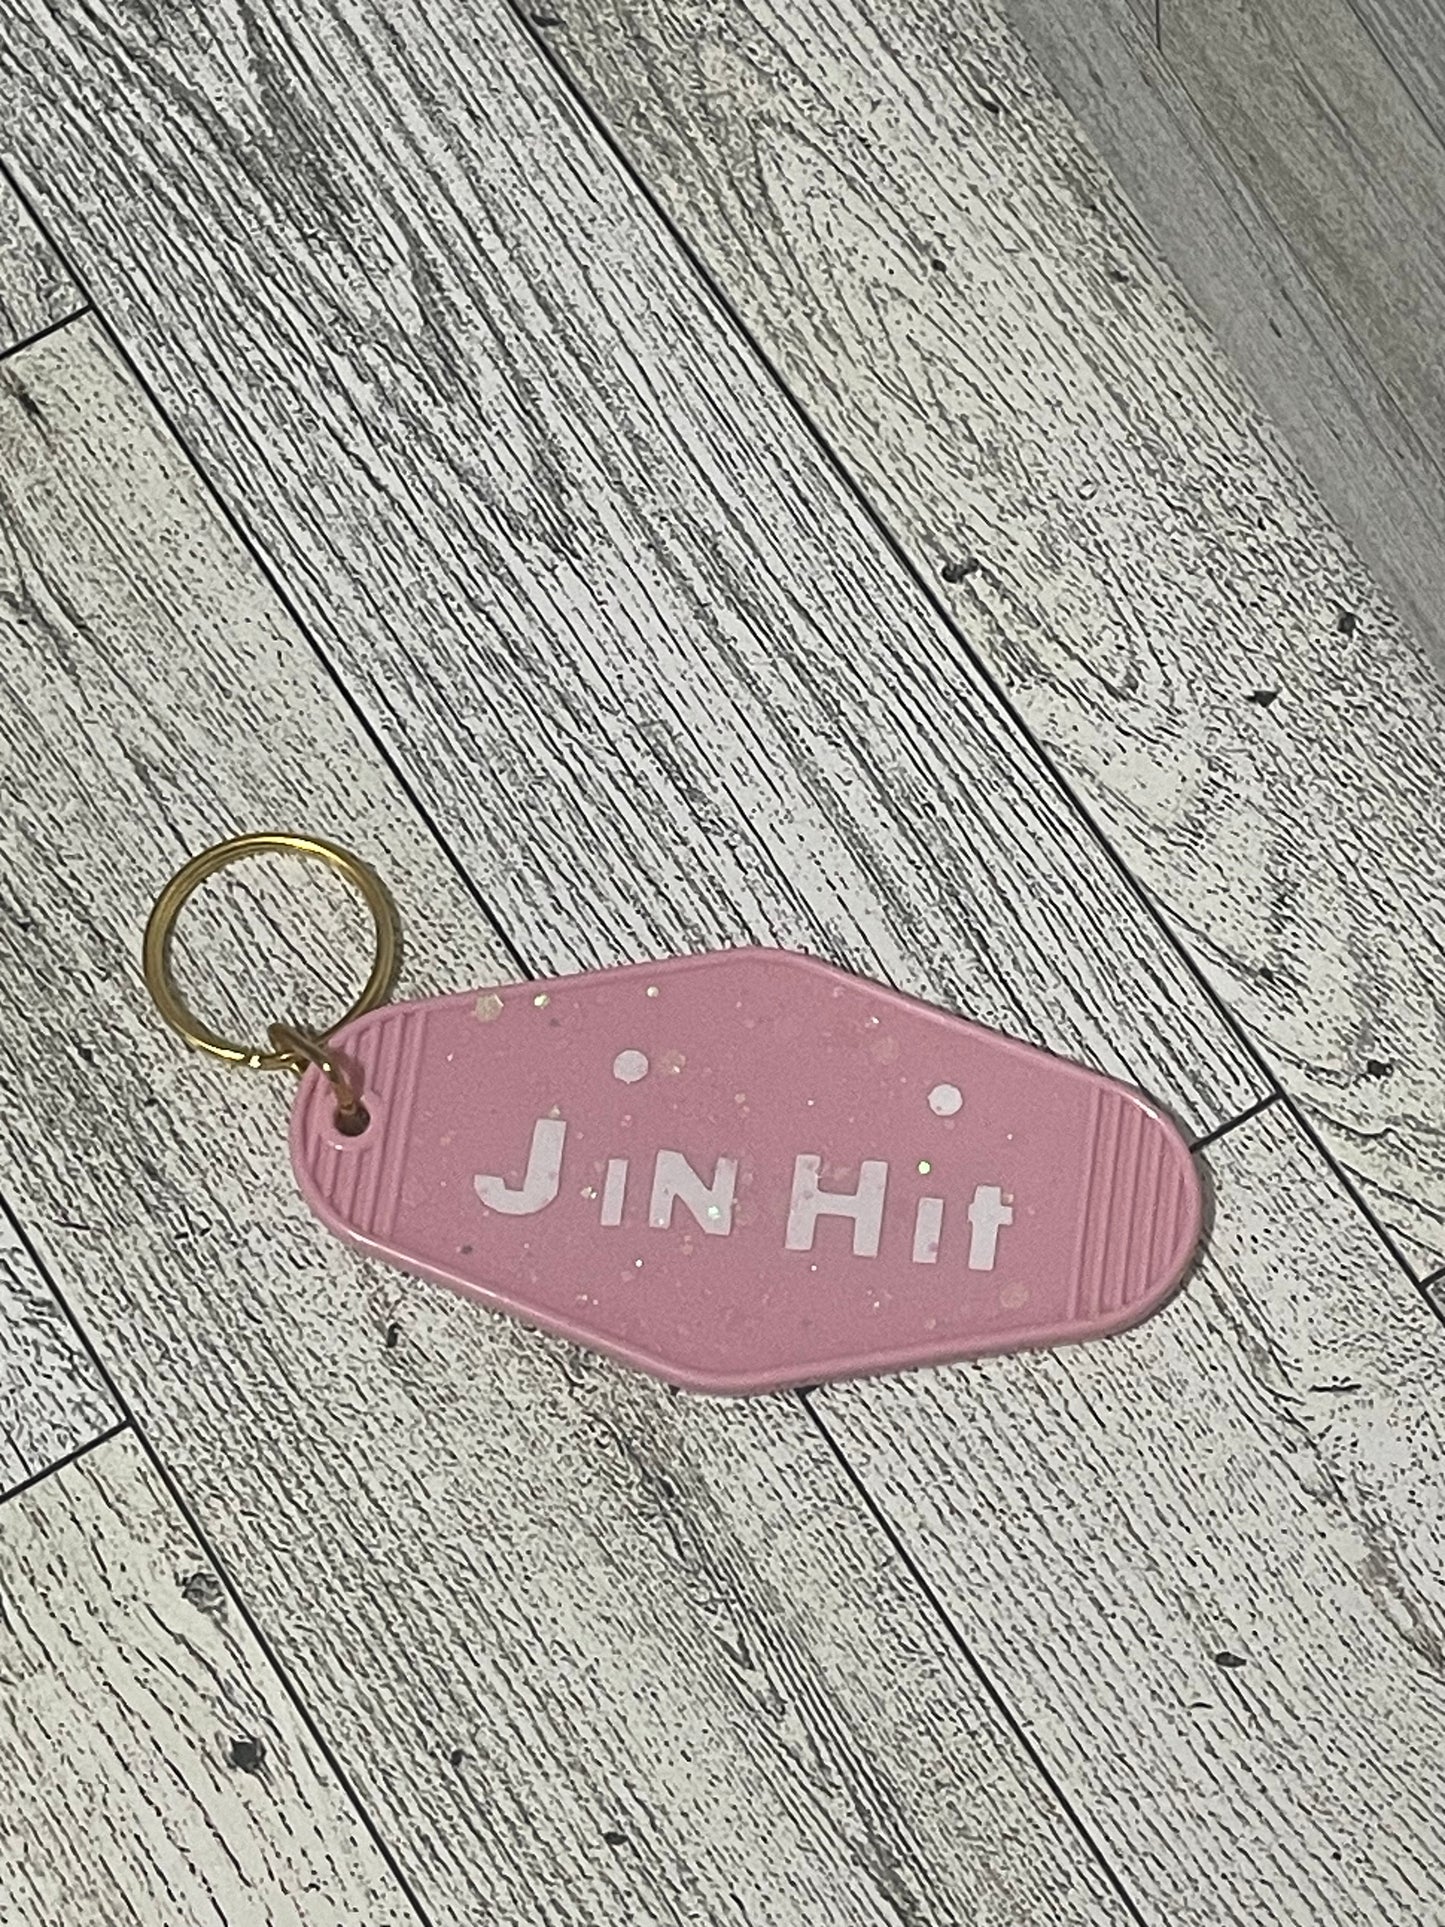 Jin Hit Keychain